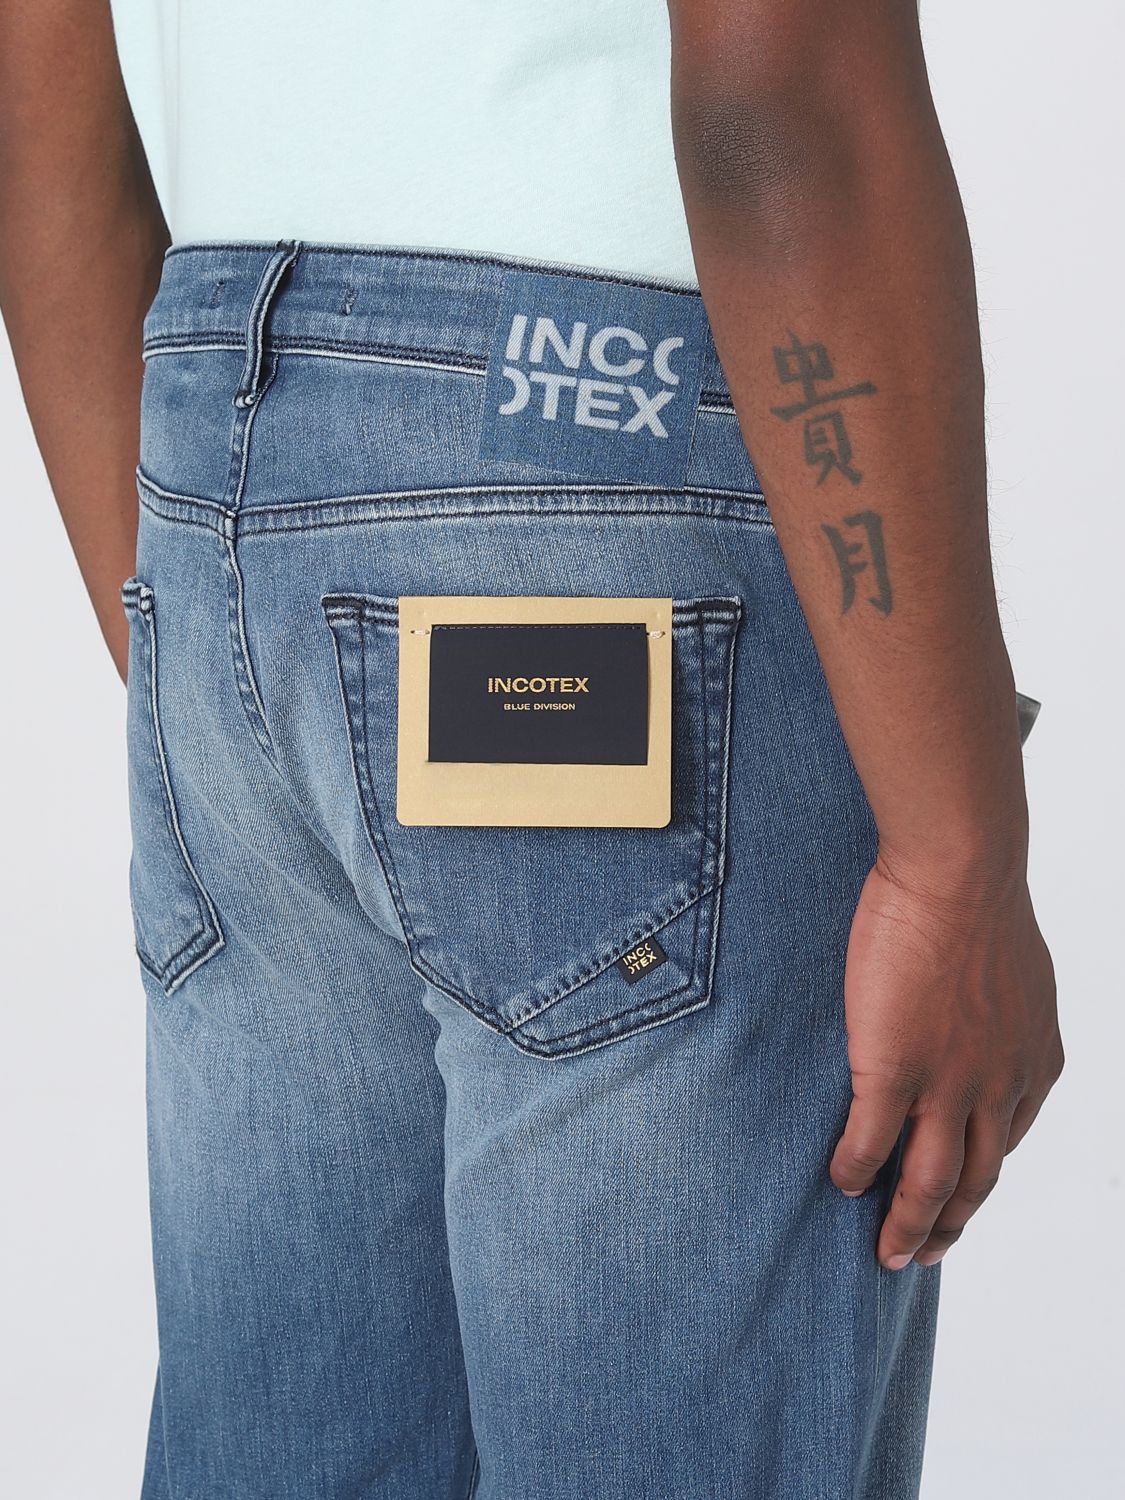 beton een miljoen overhemd INCOTEX: jeans for man - Stone Washed | Incotex jeans BDPS0003F1702918W2  online on GIGLIO.COM